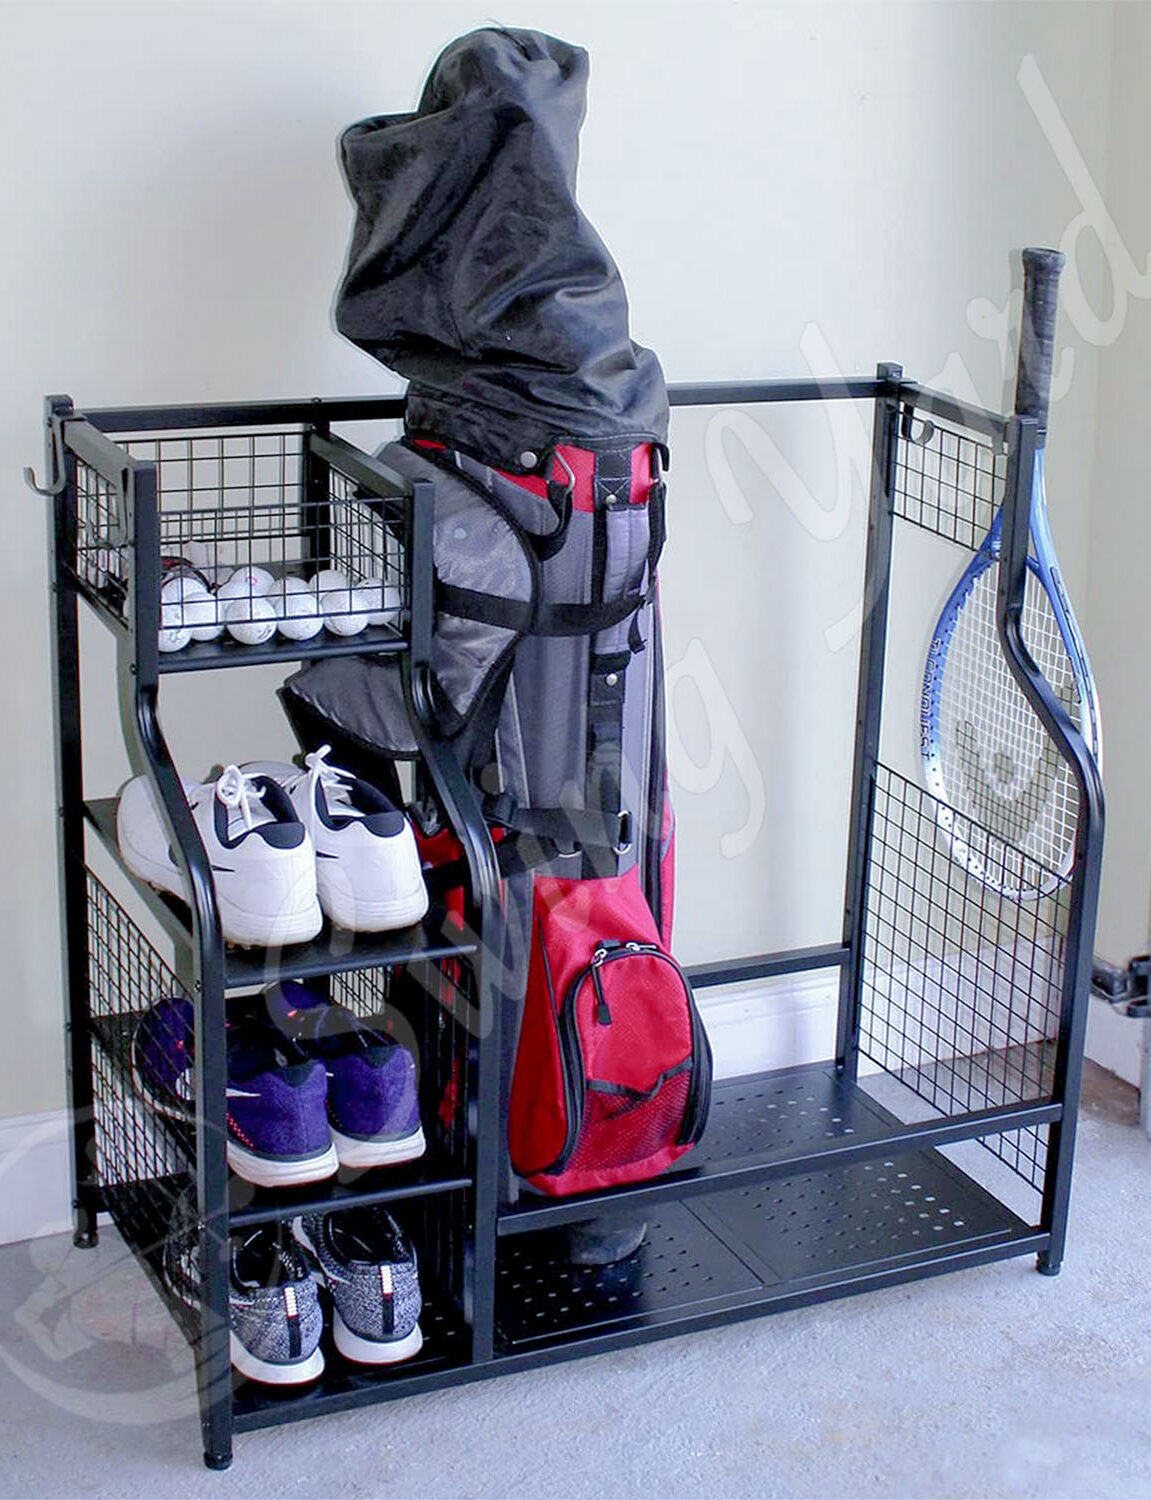 PLKOW Golf Bag Storage Rack